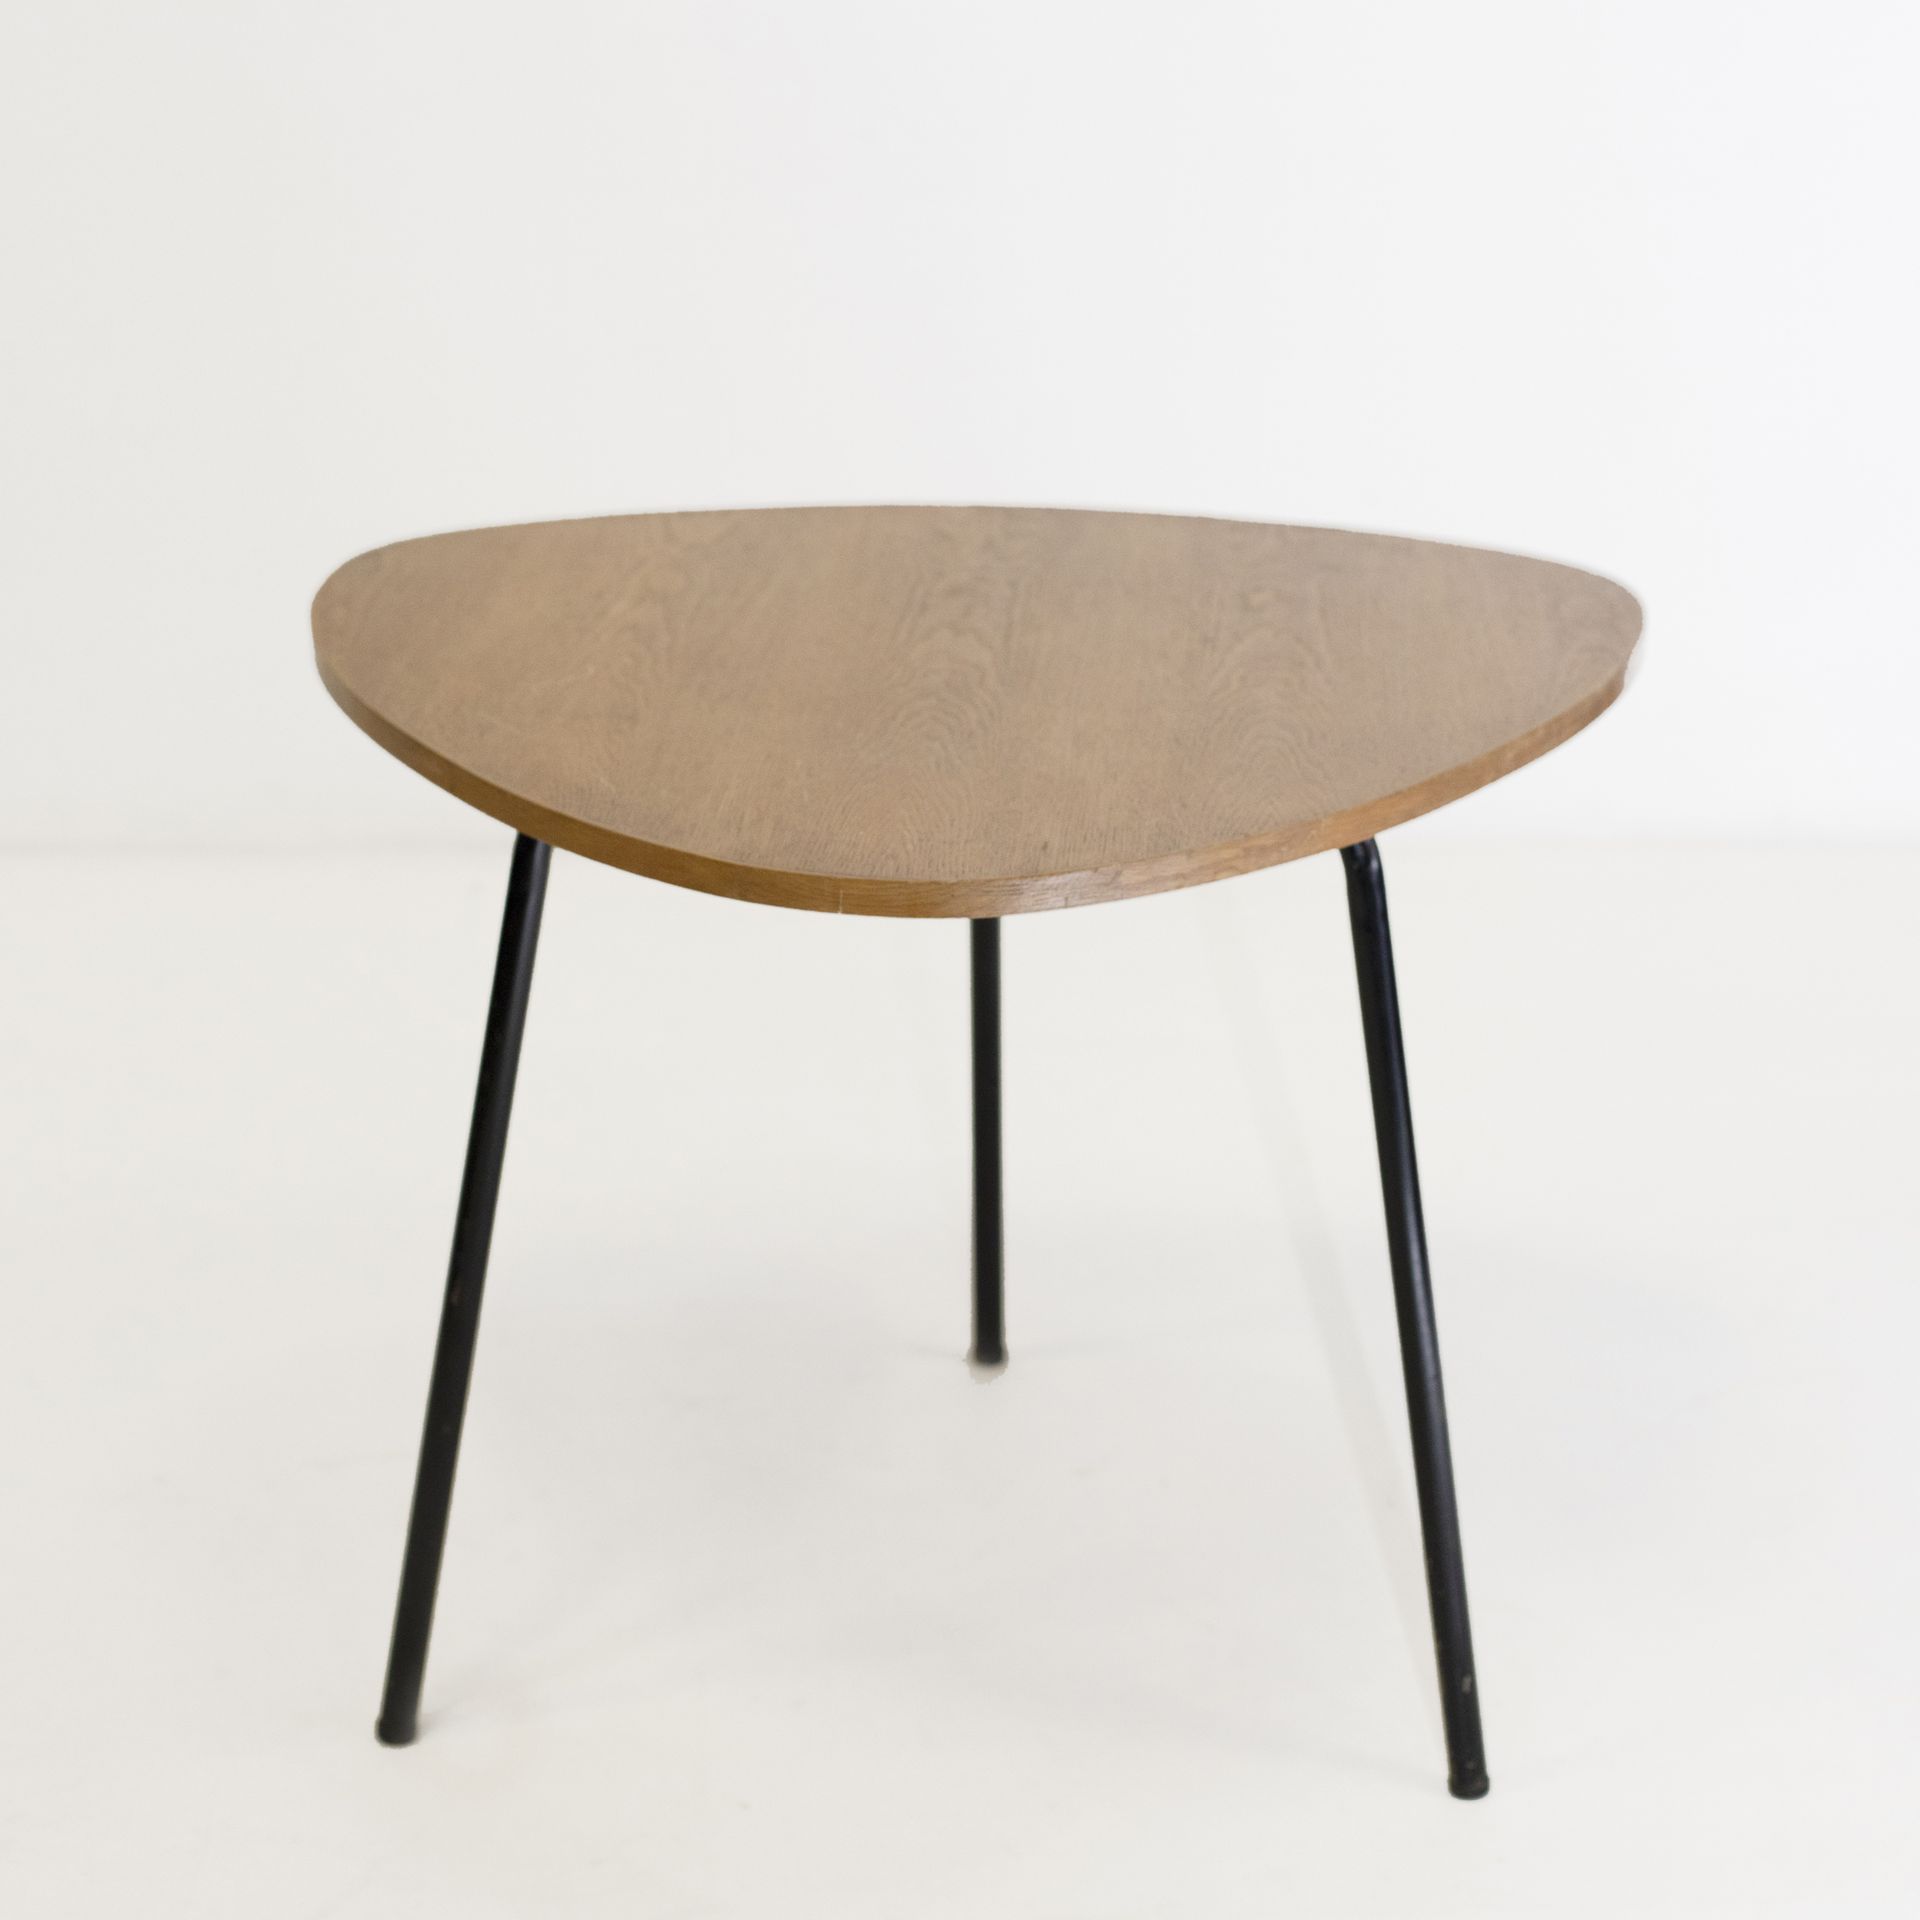 Pierre GUARICHE (1926-1995) 三角形脚架桌

橡木饰面和黑色漆面金属

约1955年

高_68厘米 宽_86厘米 深_86厘米

(&hellip;